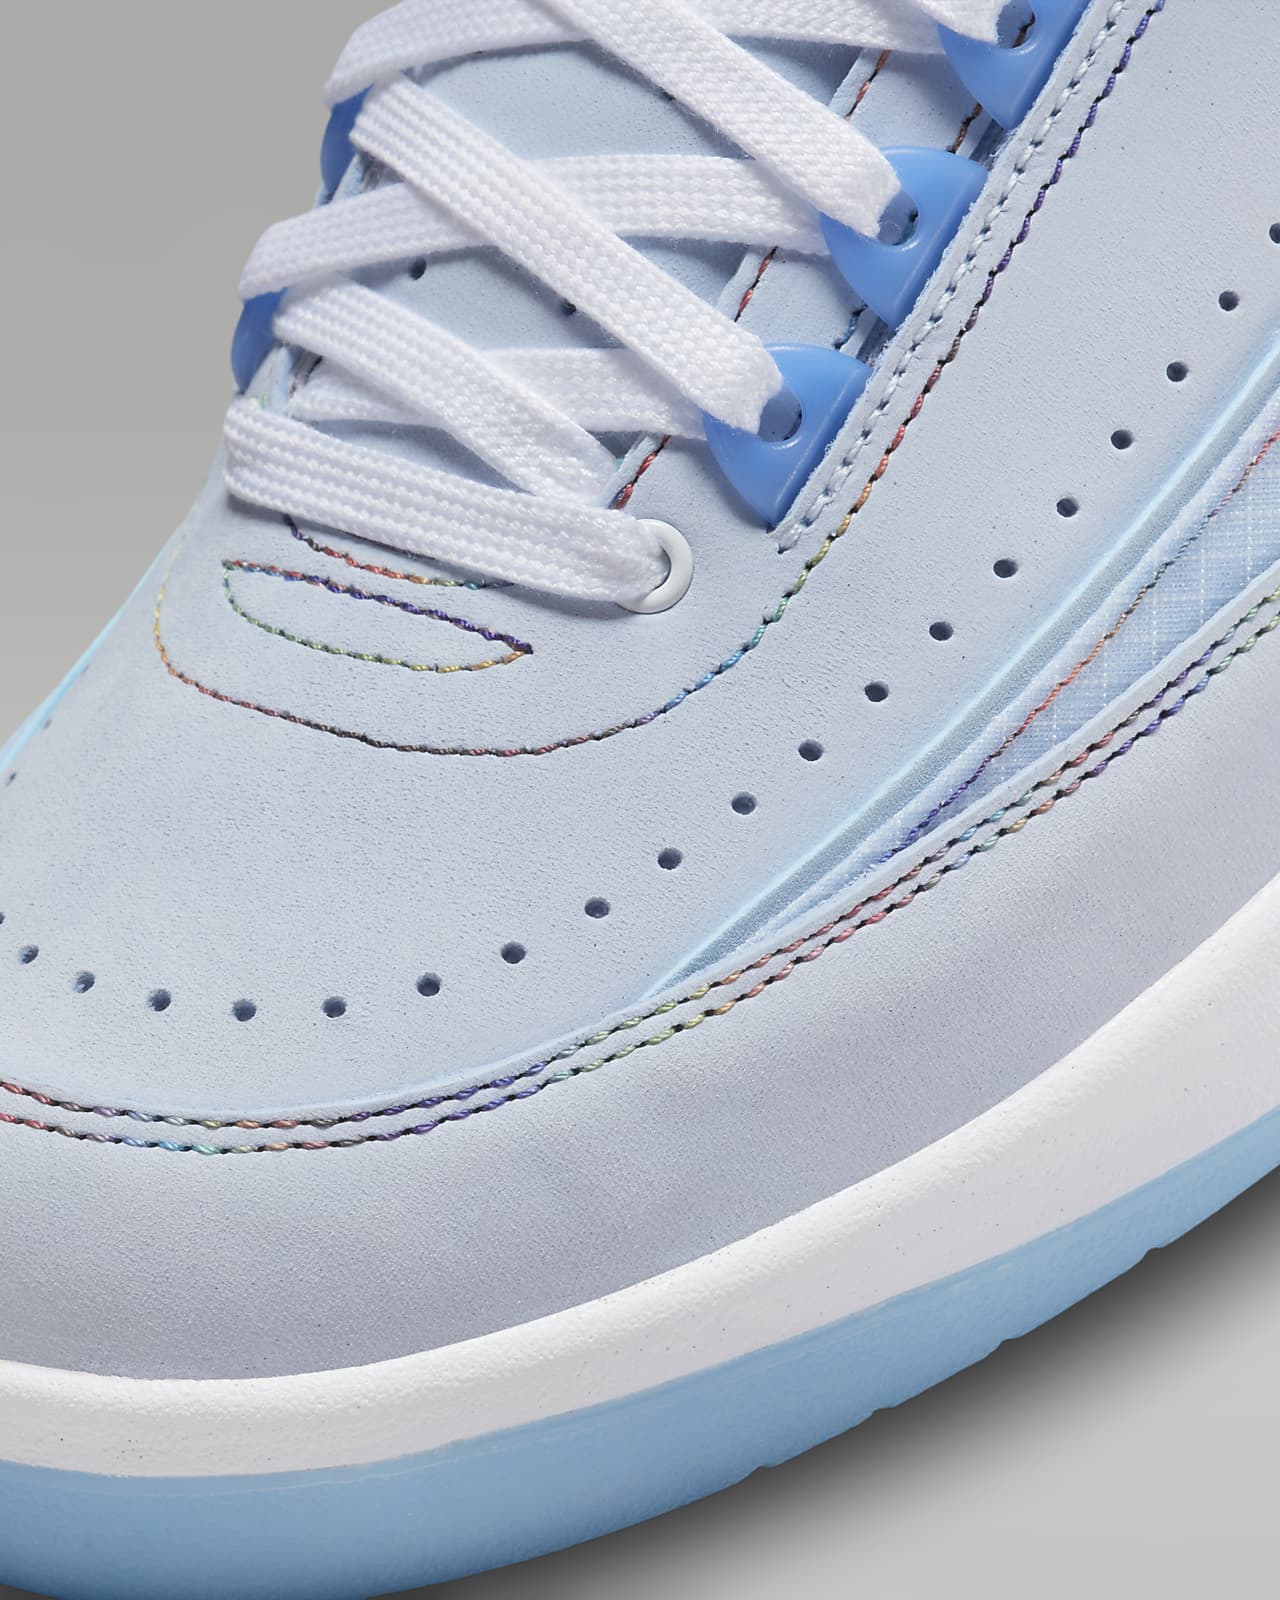 J Balvin x Nike Air Jordan 3 sneaker collection: Where to get